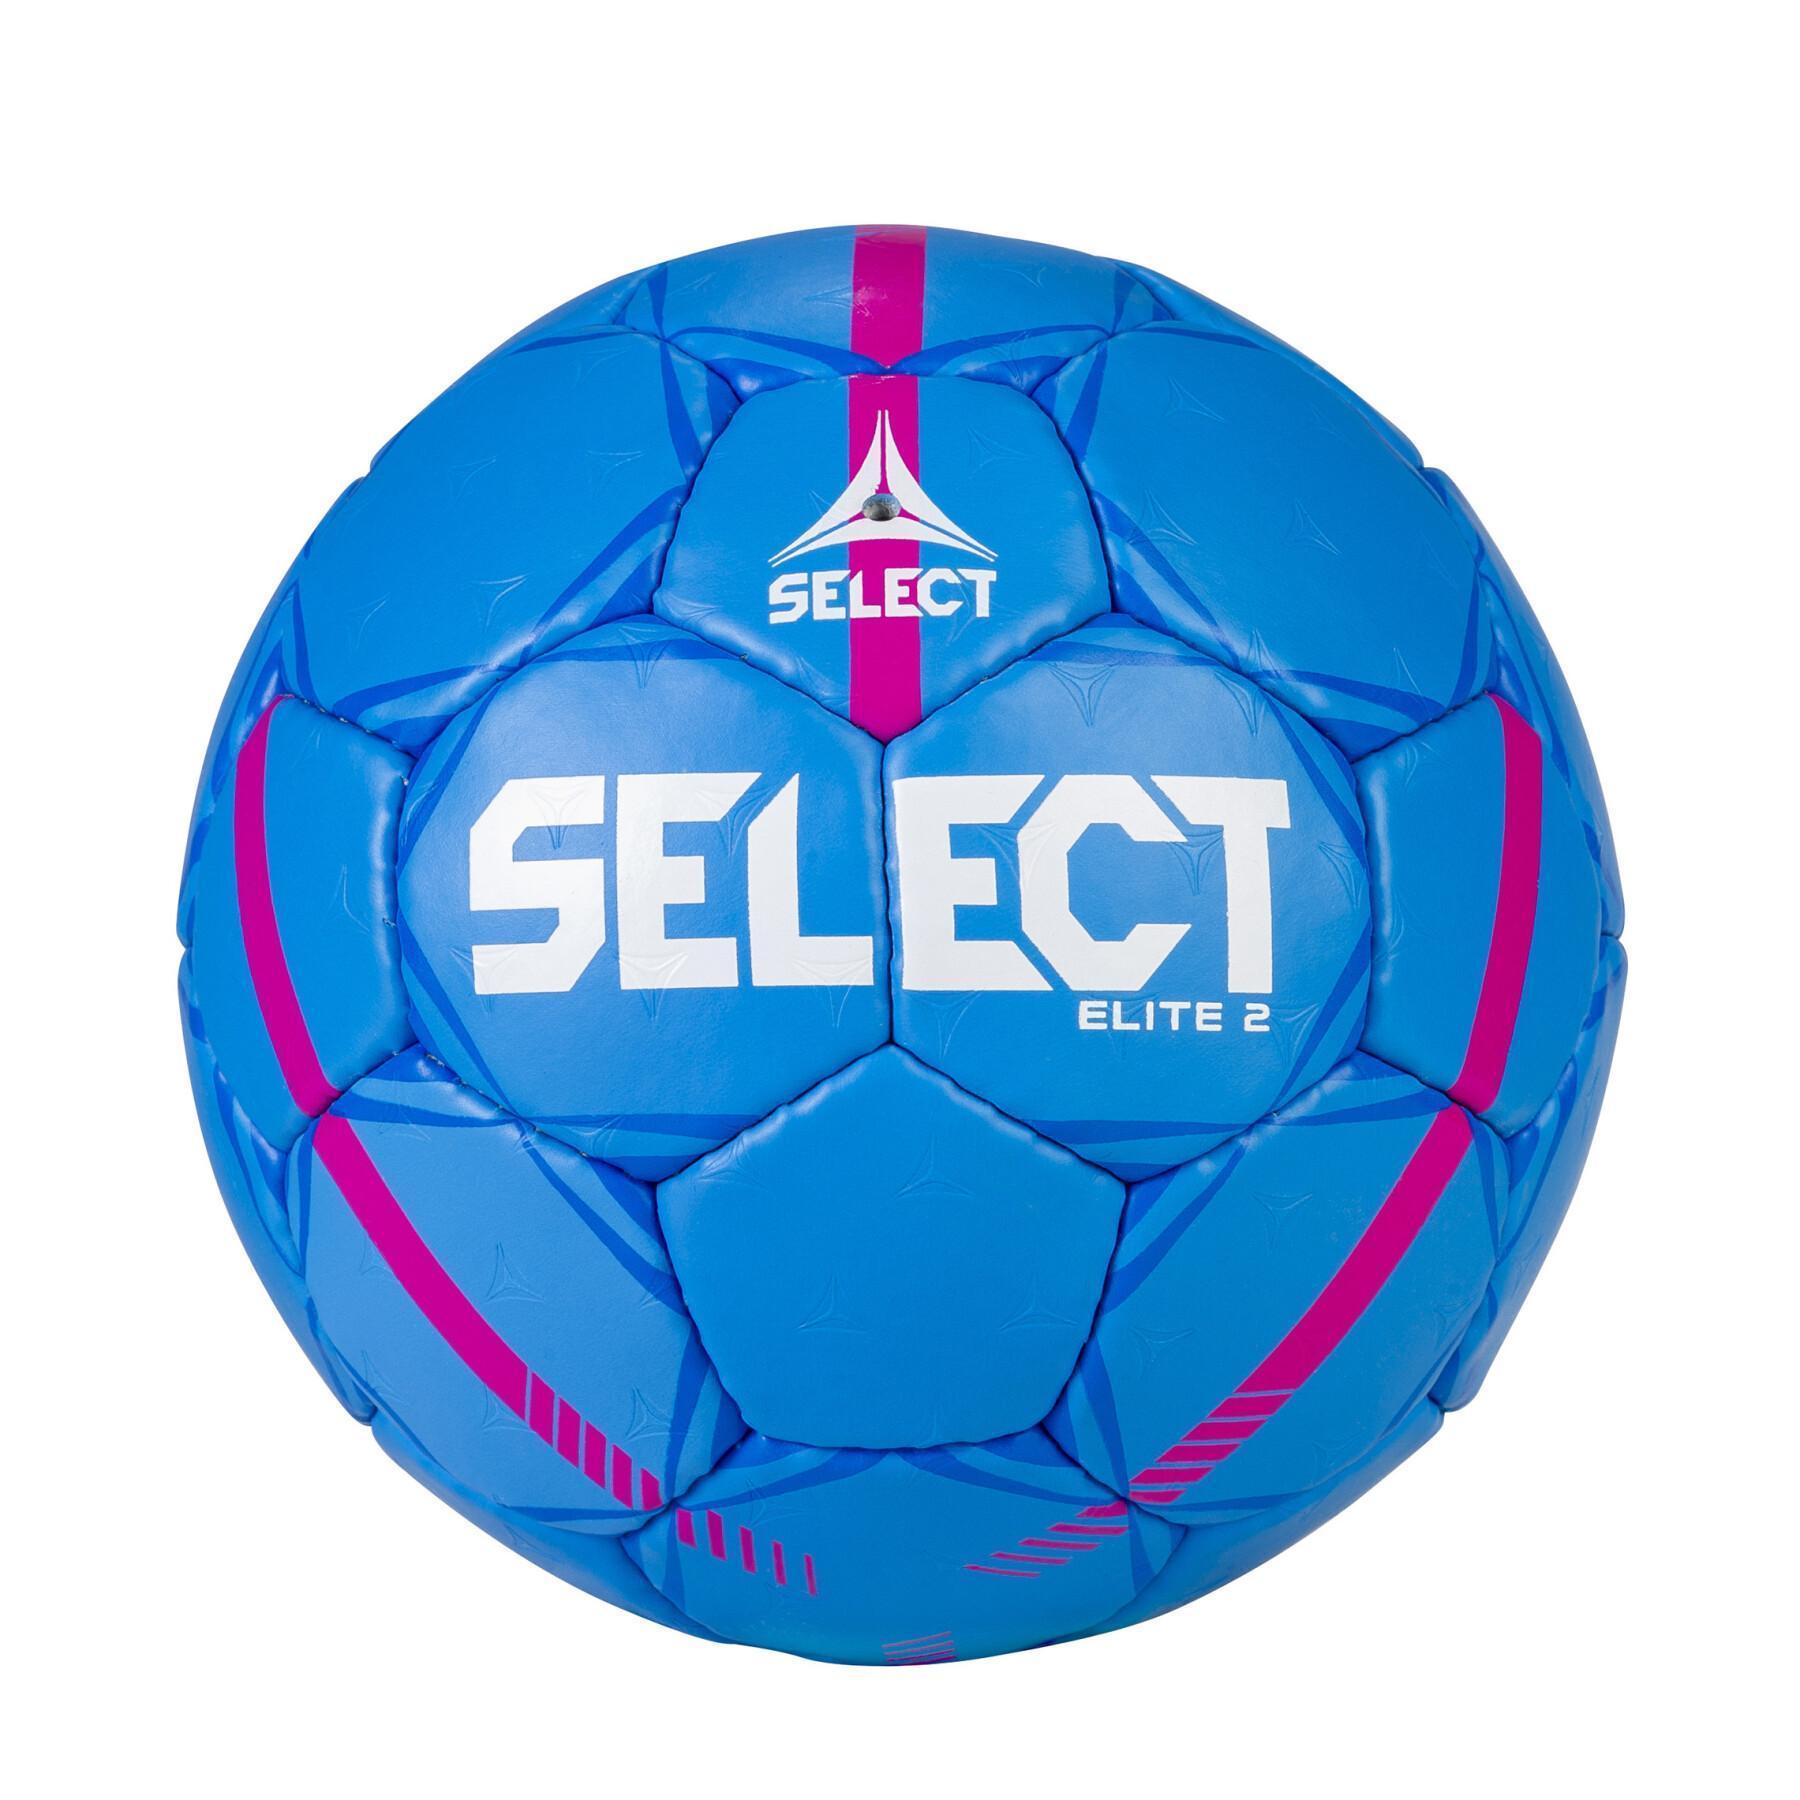 Handball Select Elite 2 Intersport